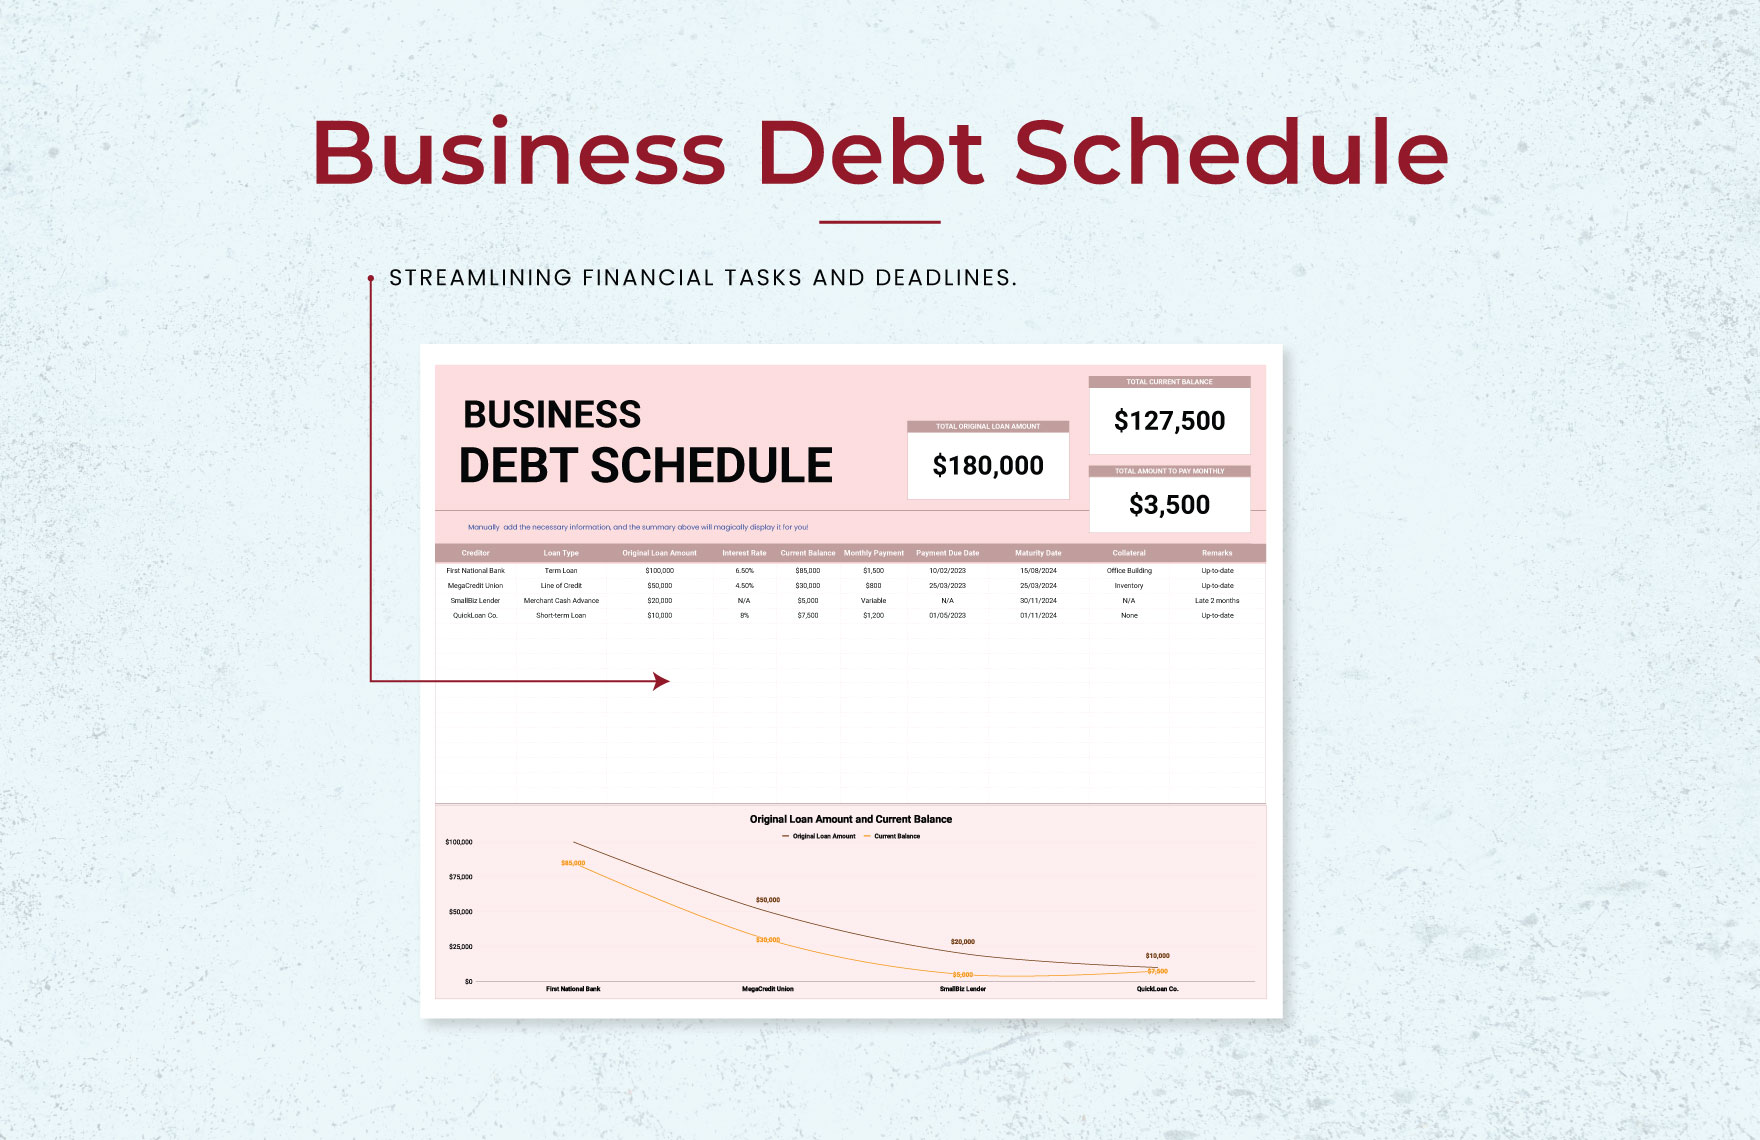 Business Debt Schedule Template